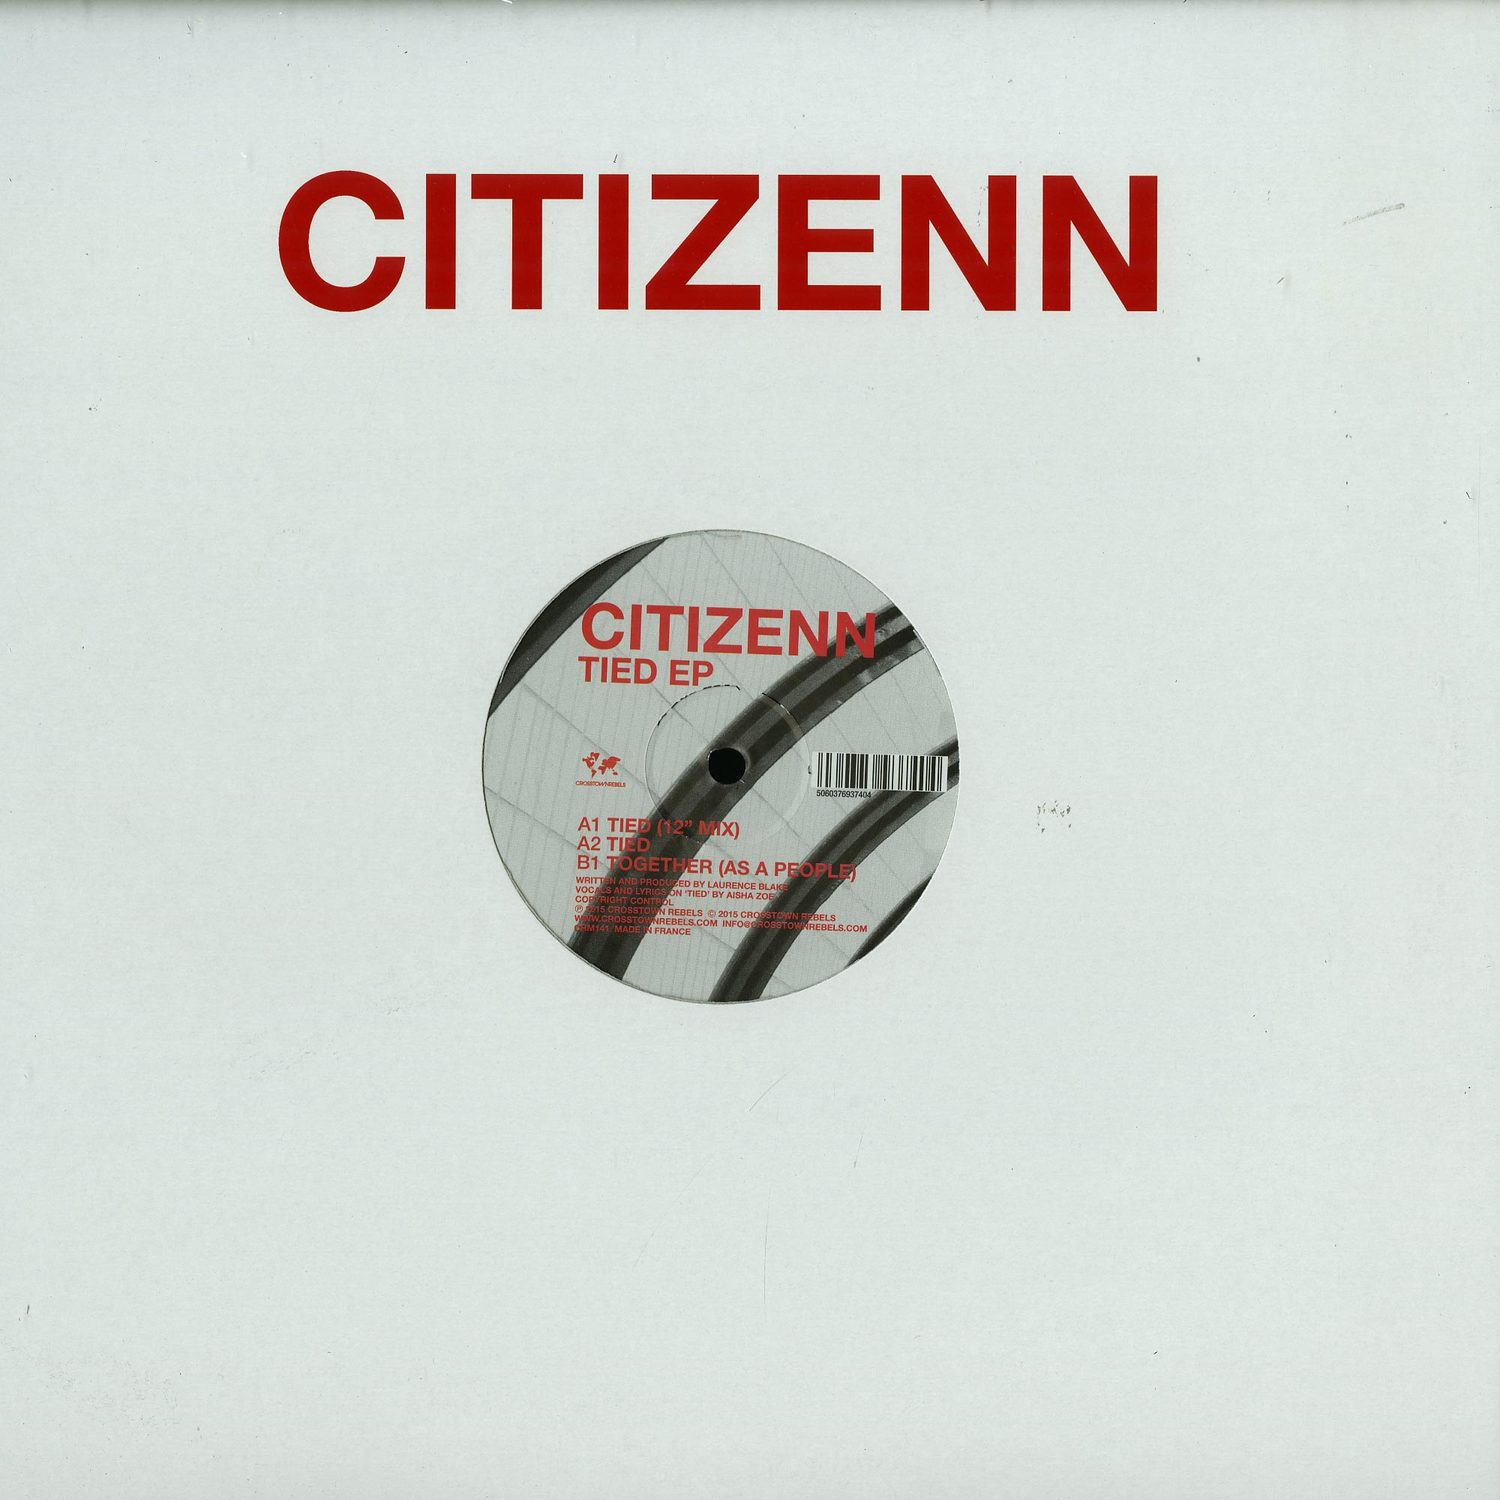 Citizenn - TIED